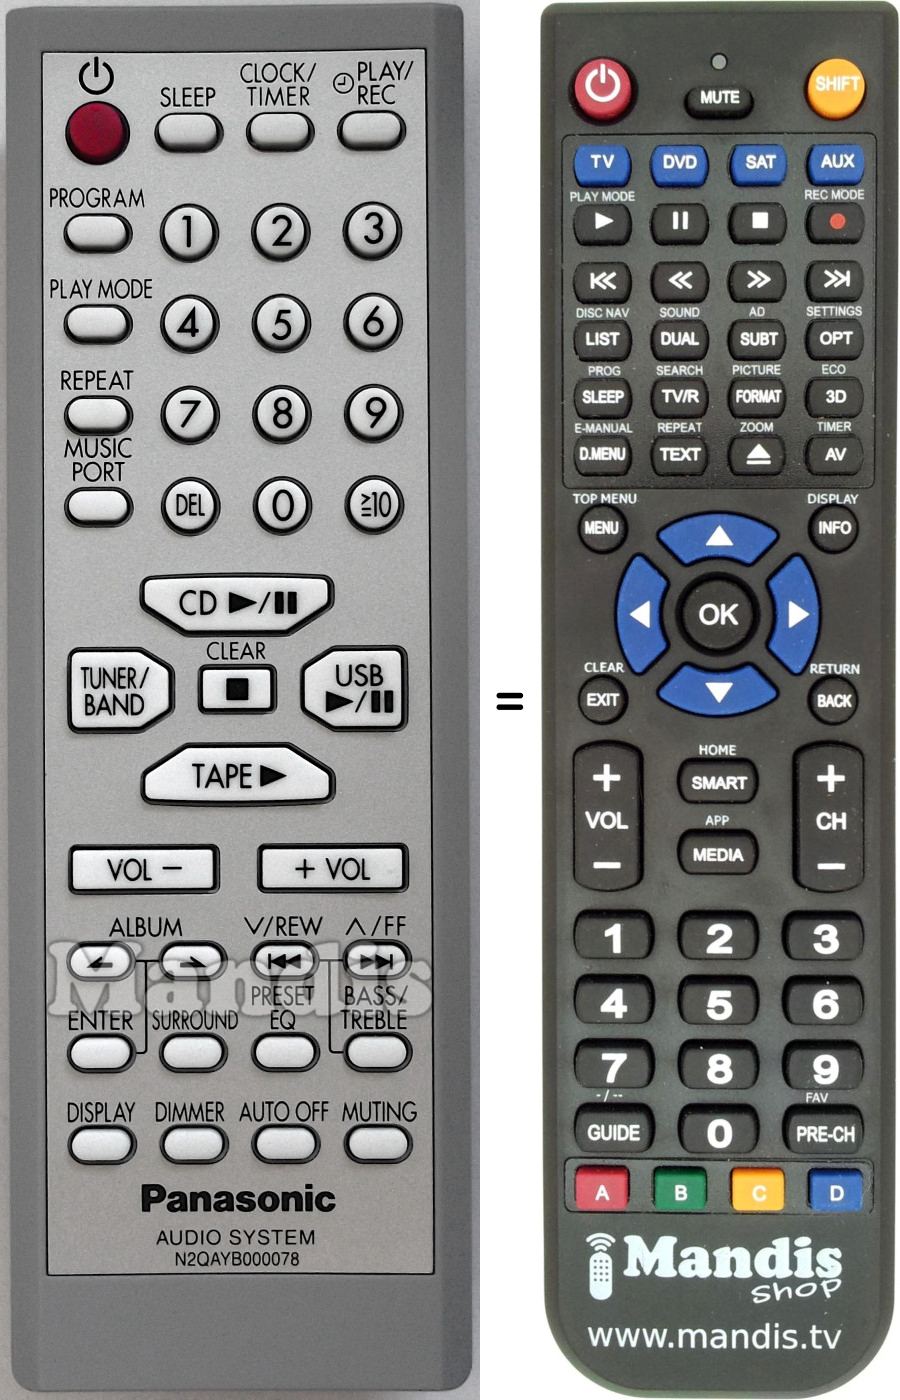 Replacement remote control Panasonic N2QAYB000078